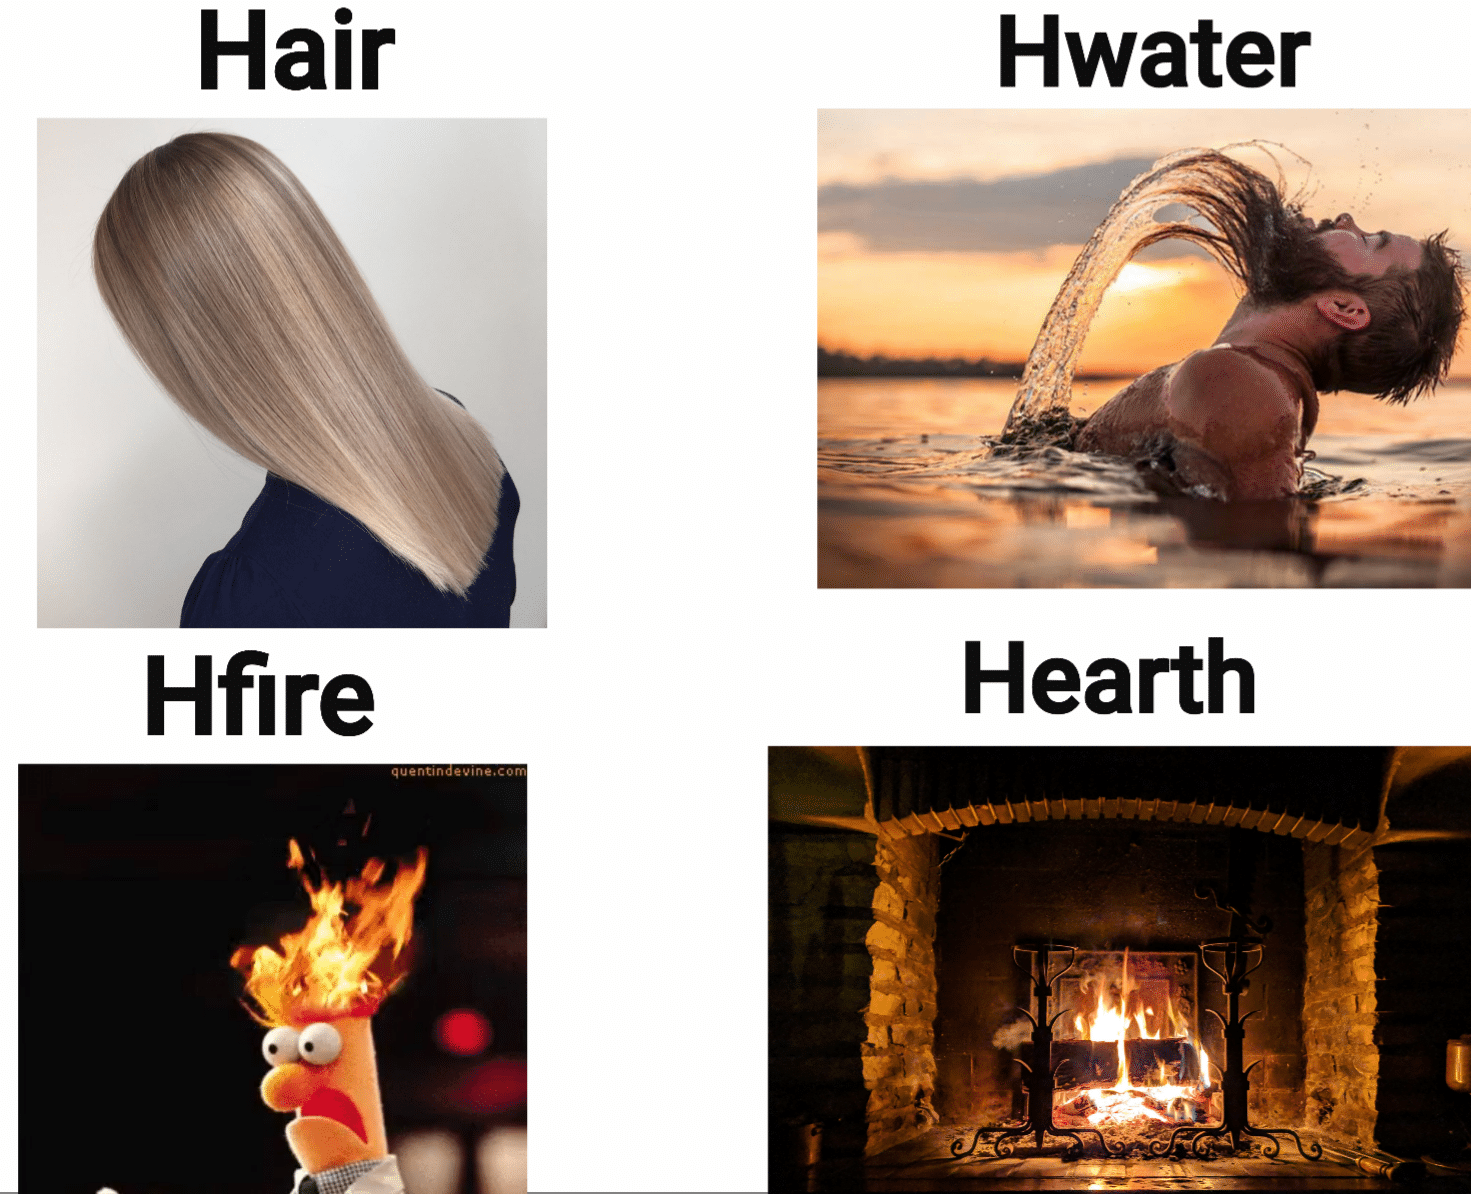 Dank, Hfire, Hearth other memes Dank, Hfire, Hearth text: Hair Hfire Hwater Hearth 